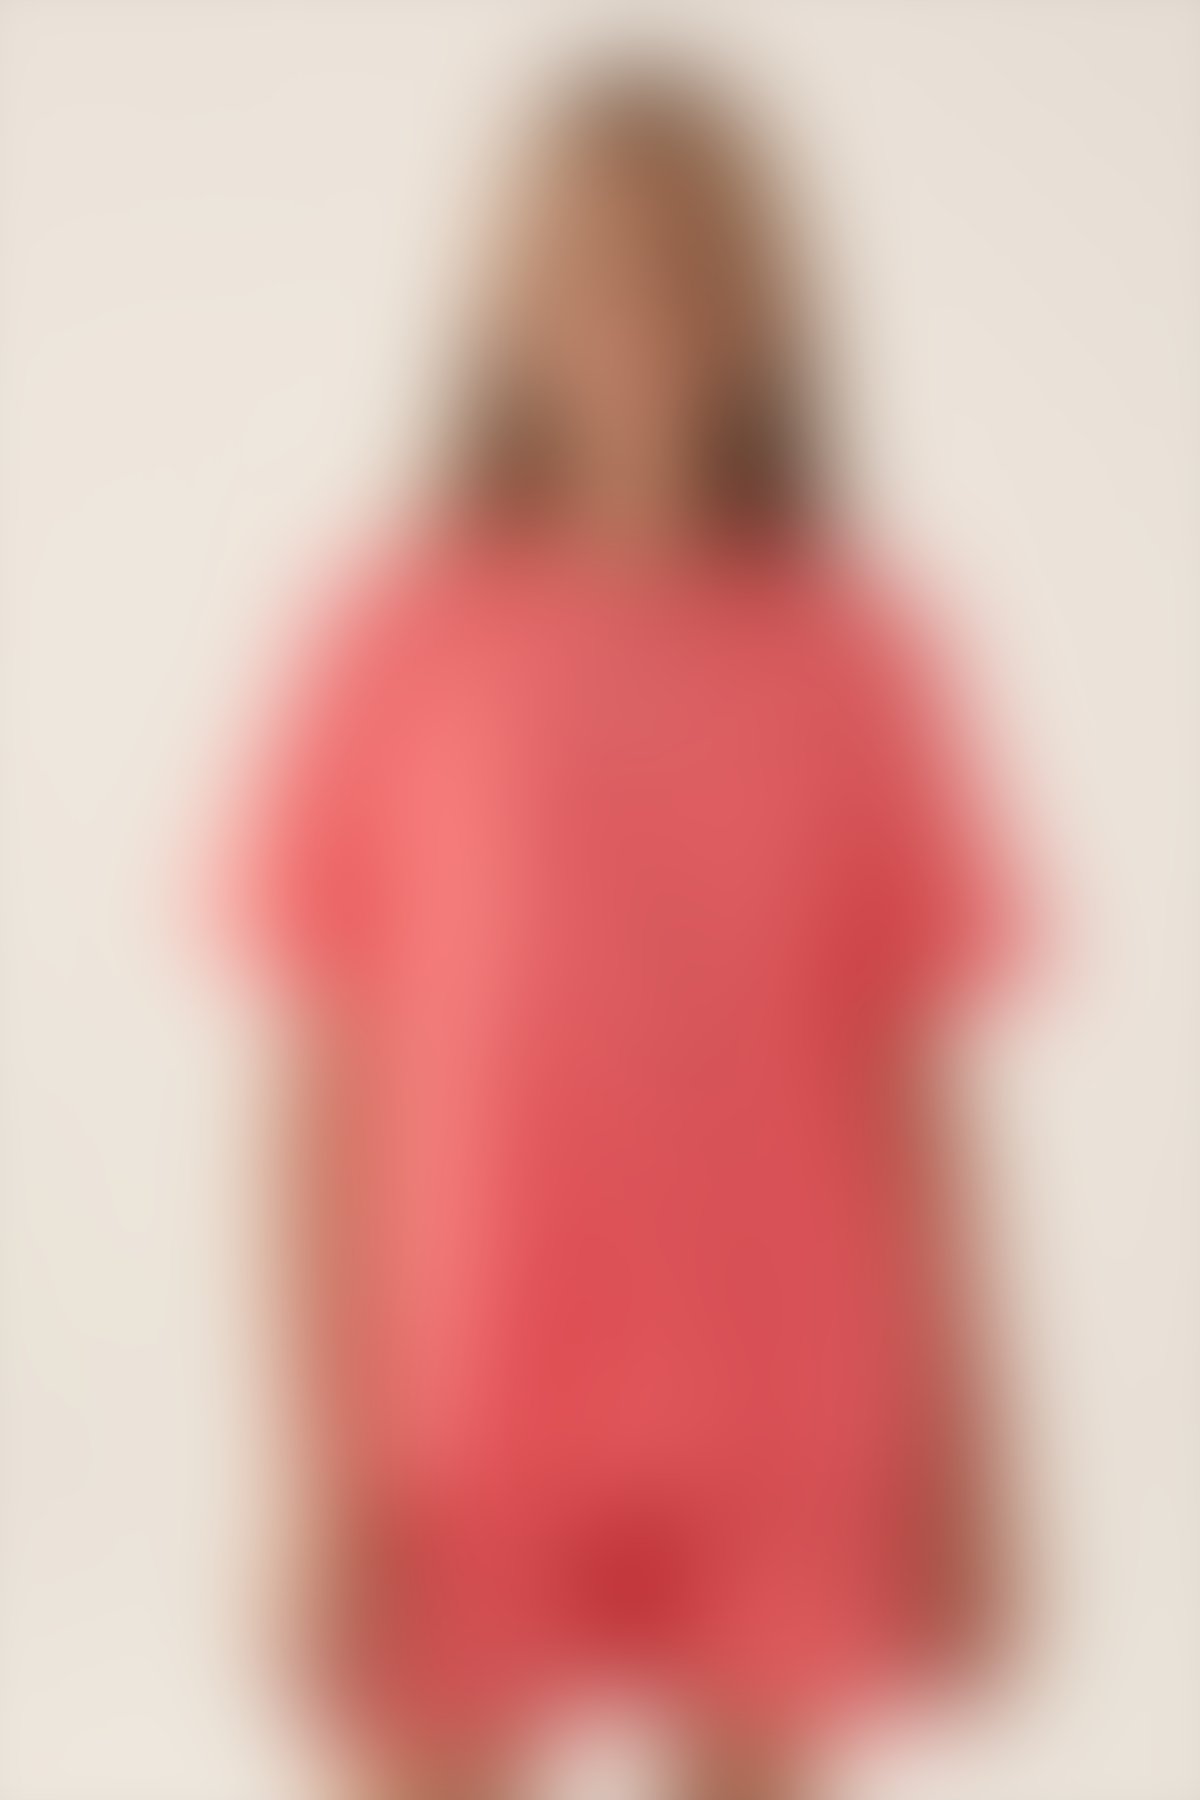 KAPPA - Kappa Emblem Neon Pembe Kız Çocuk T-Shirt